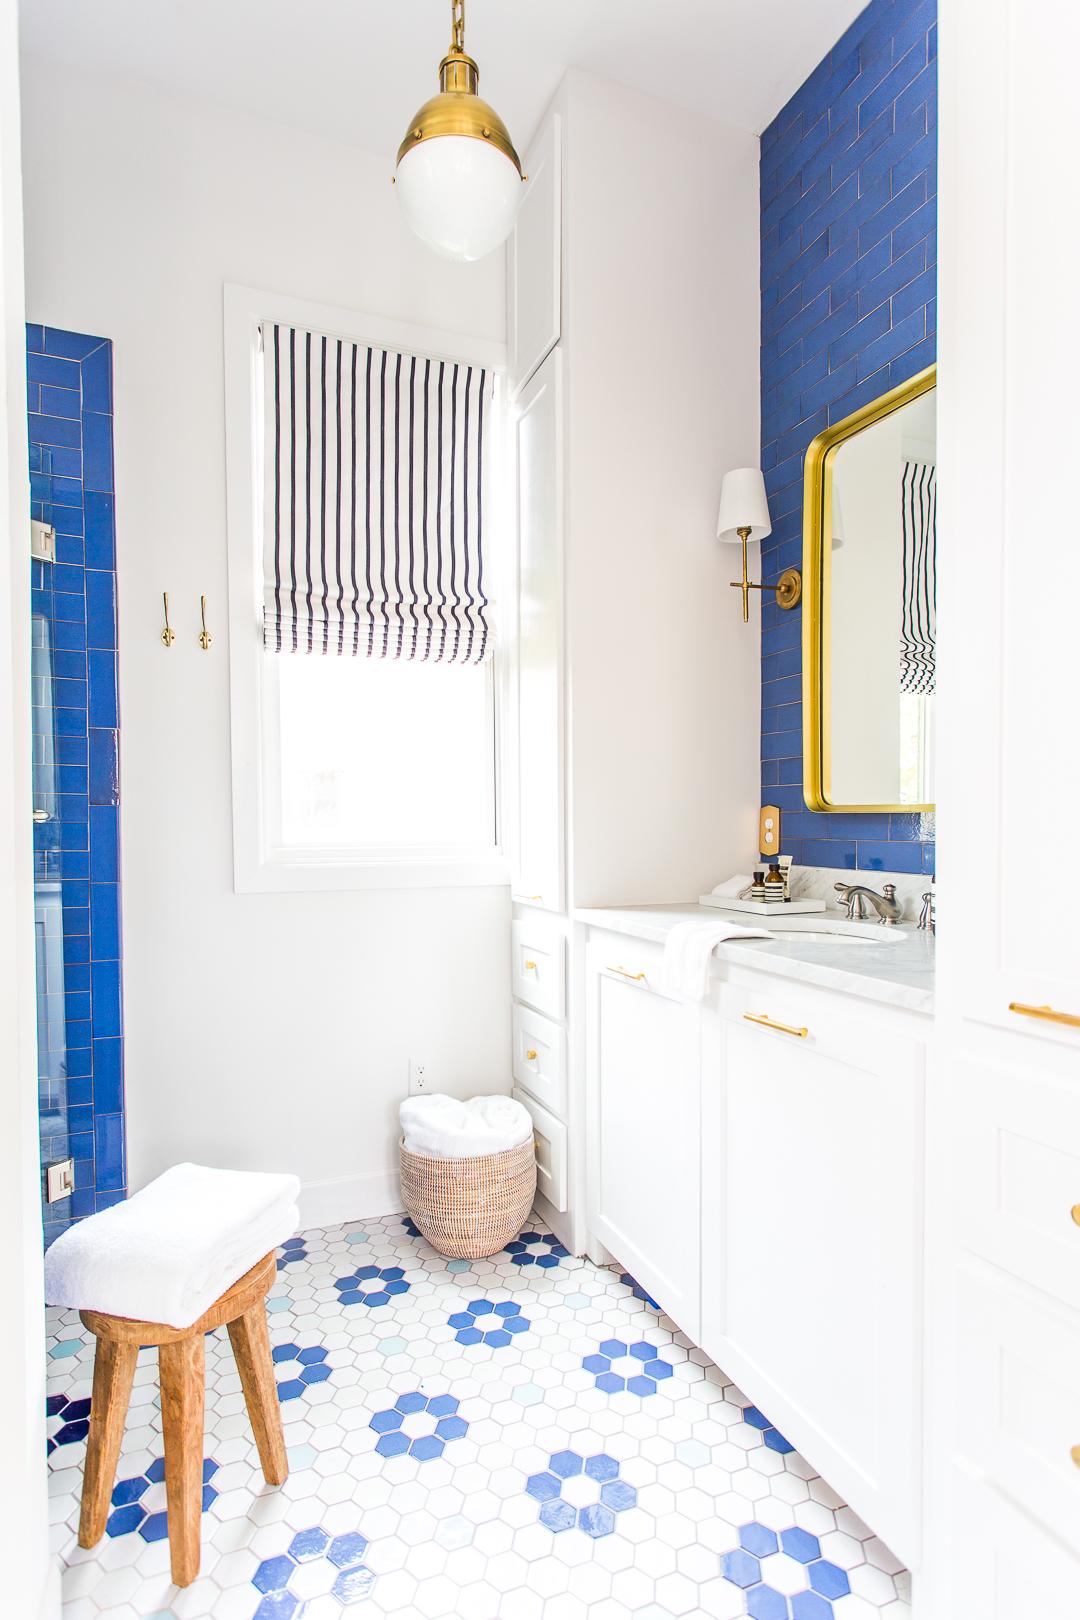 Lake house master bathroom reveal - handmade blue tile - Mercury Mosaic tile - Visual Comfort lighting - bathroom vanity - blue subway tile - cobalt subway tile - white cabinets - colorful master bathroom - hex tile floor - patterned hexagon floor tiles - www.pencilshavingsstudio.com